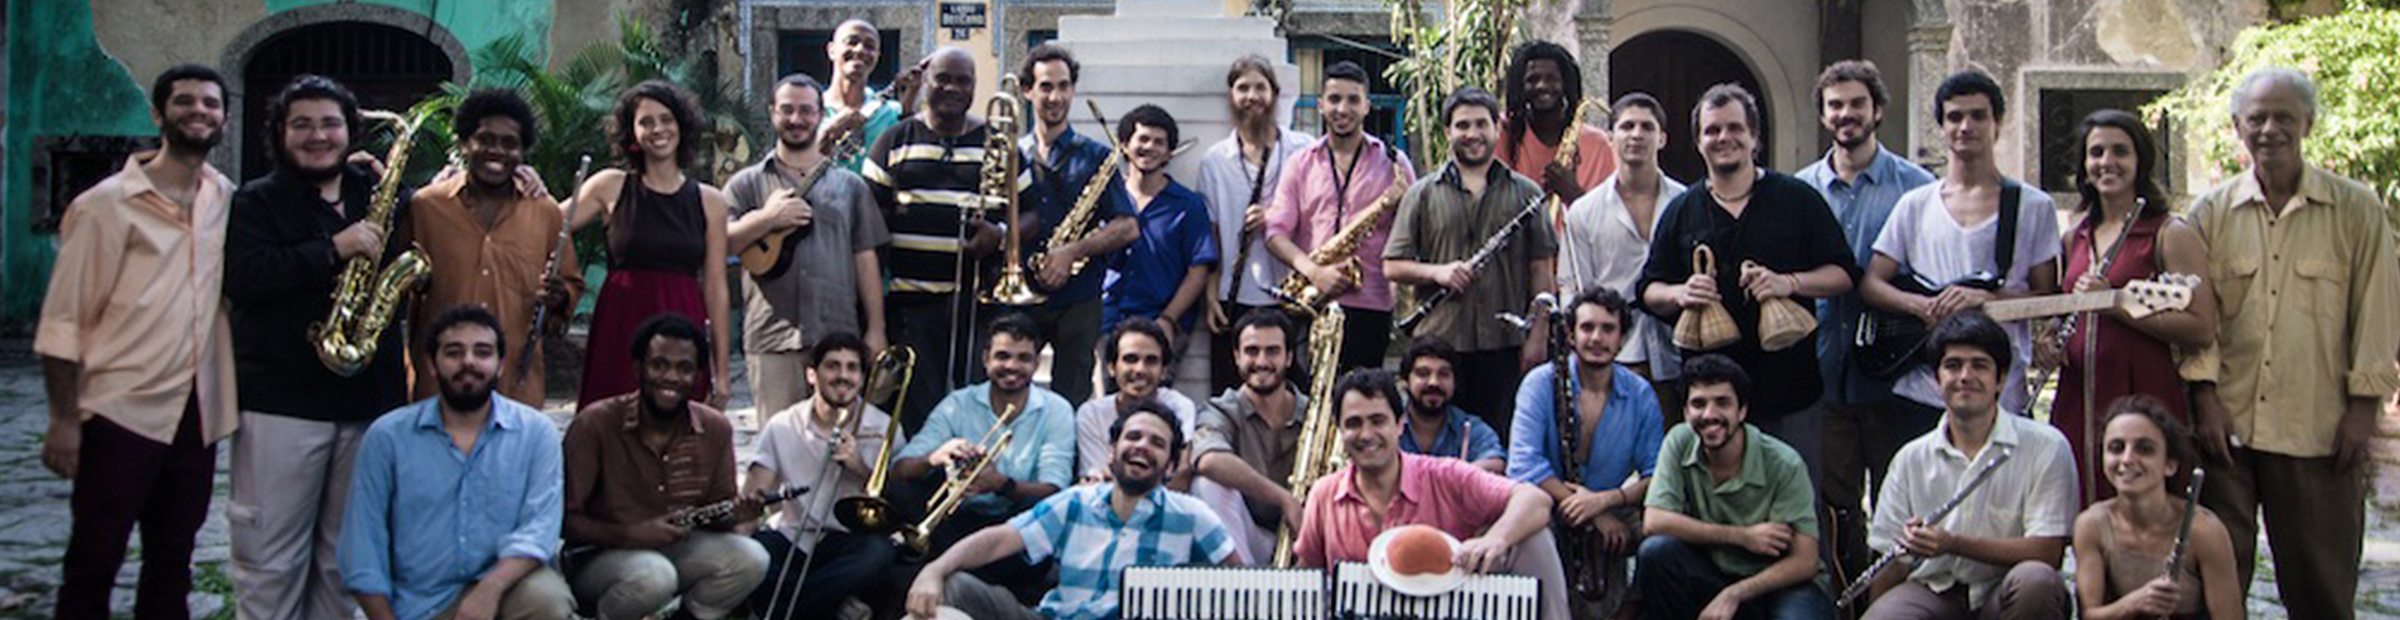 Marcelo Caldi e Kiko Horta participam de show com Orquestra de Sopros Pro Arte